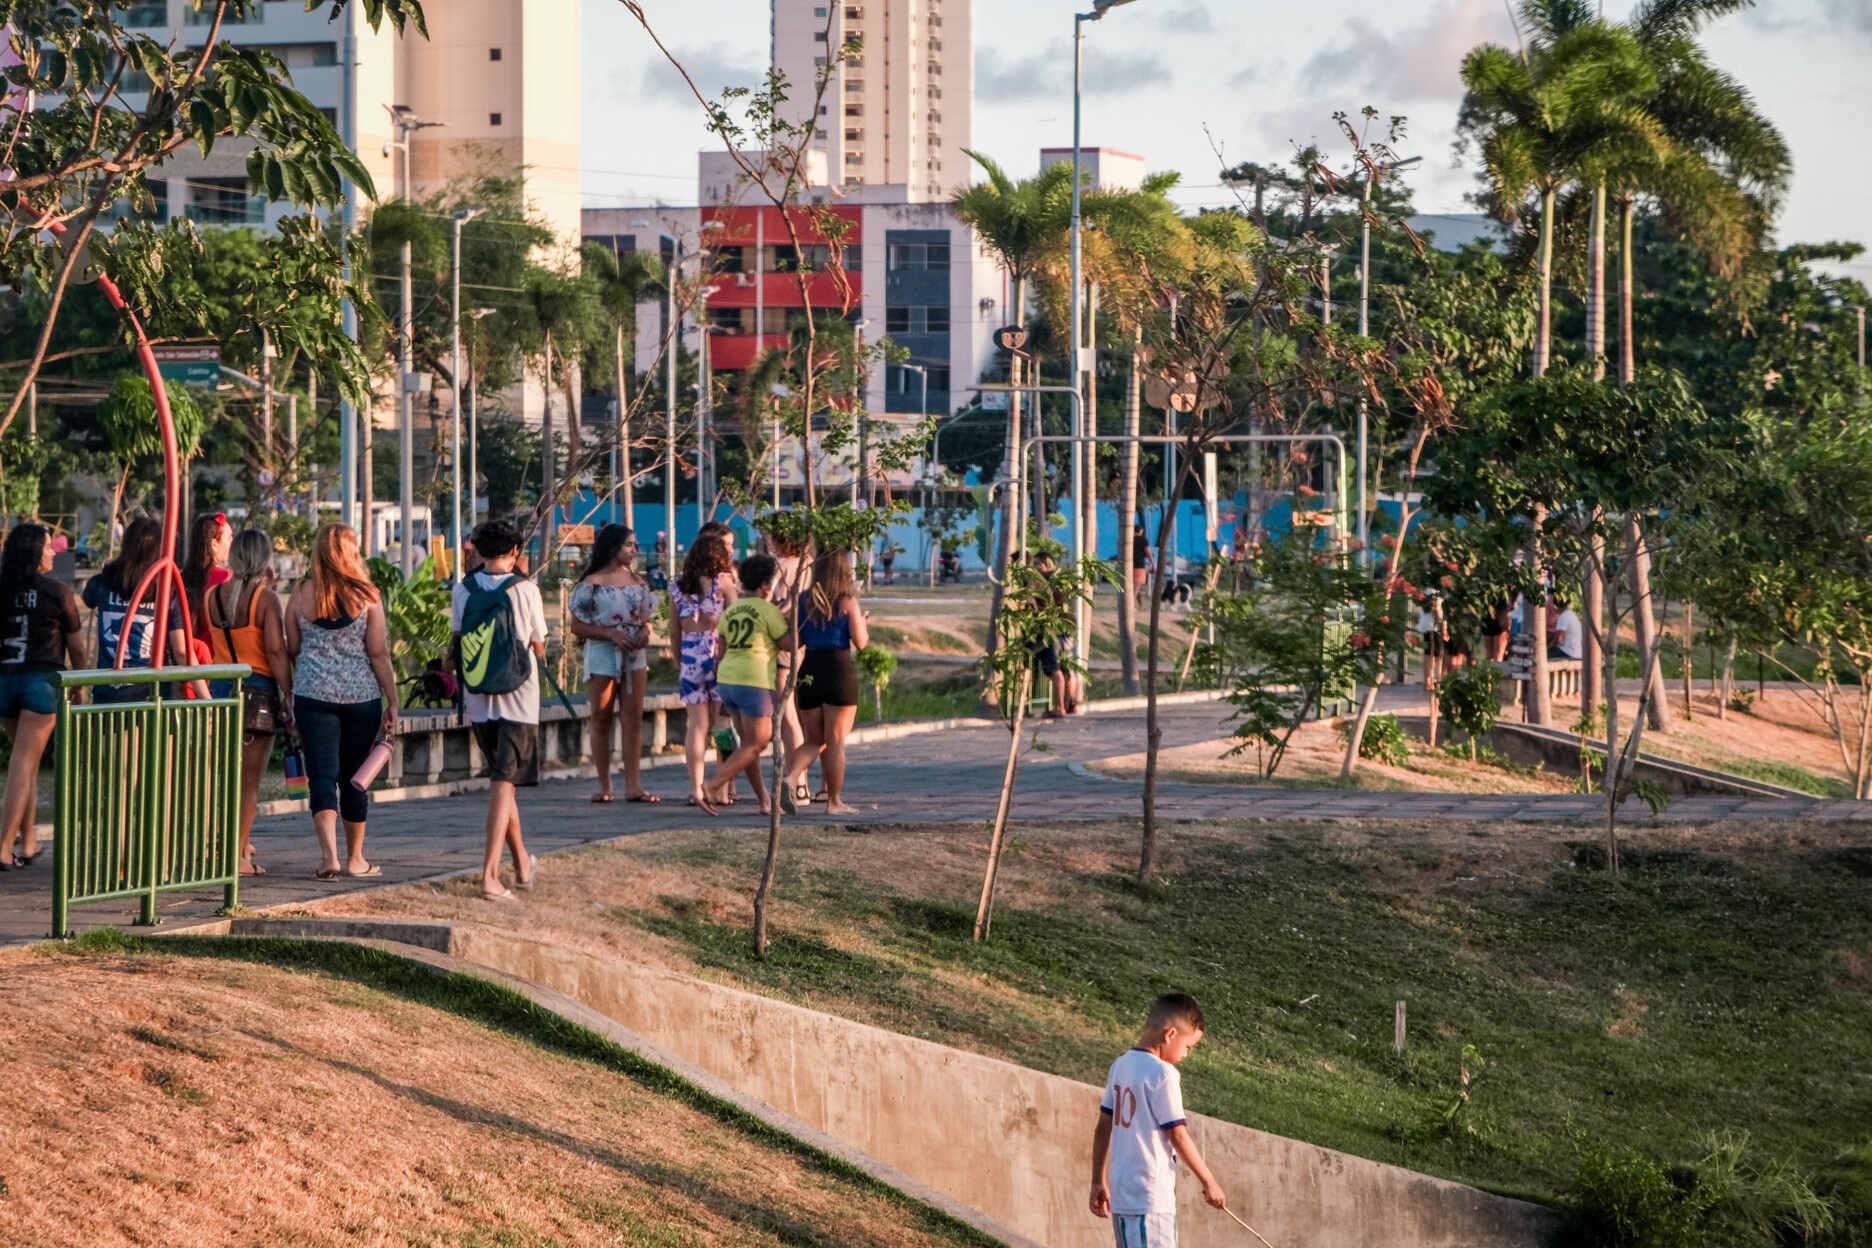 Juventude ainda é principal perfil presente nos Parques Urbanos de Fortaleza